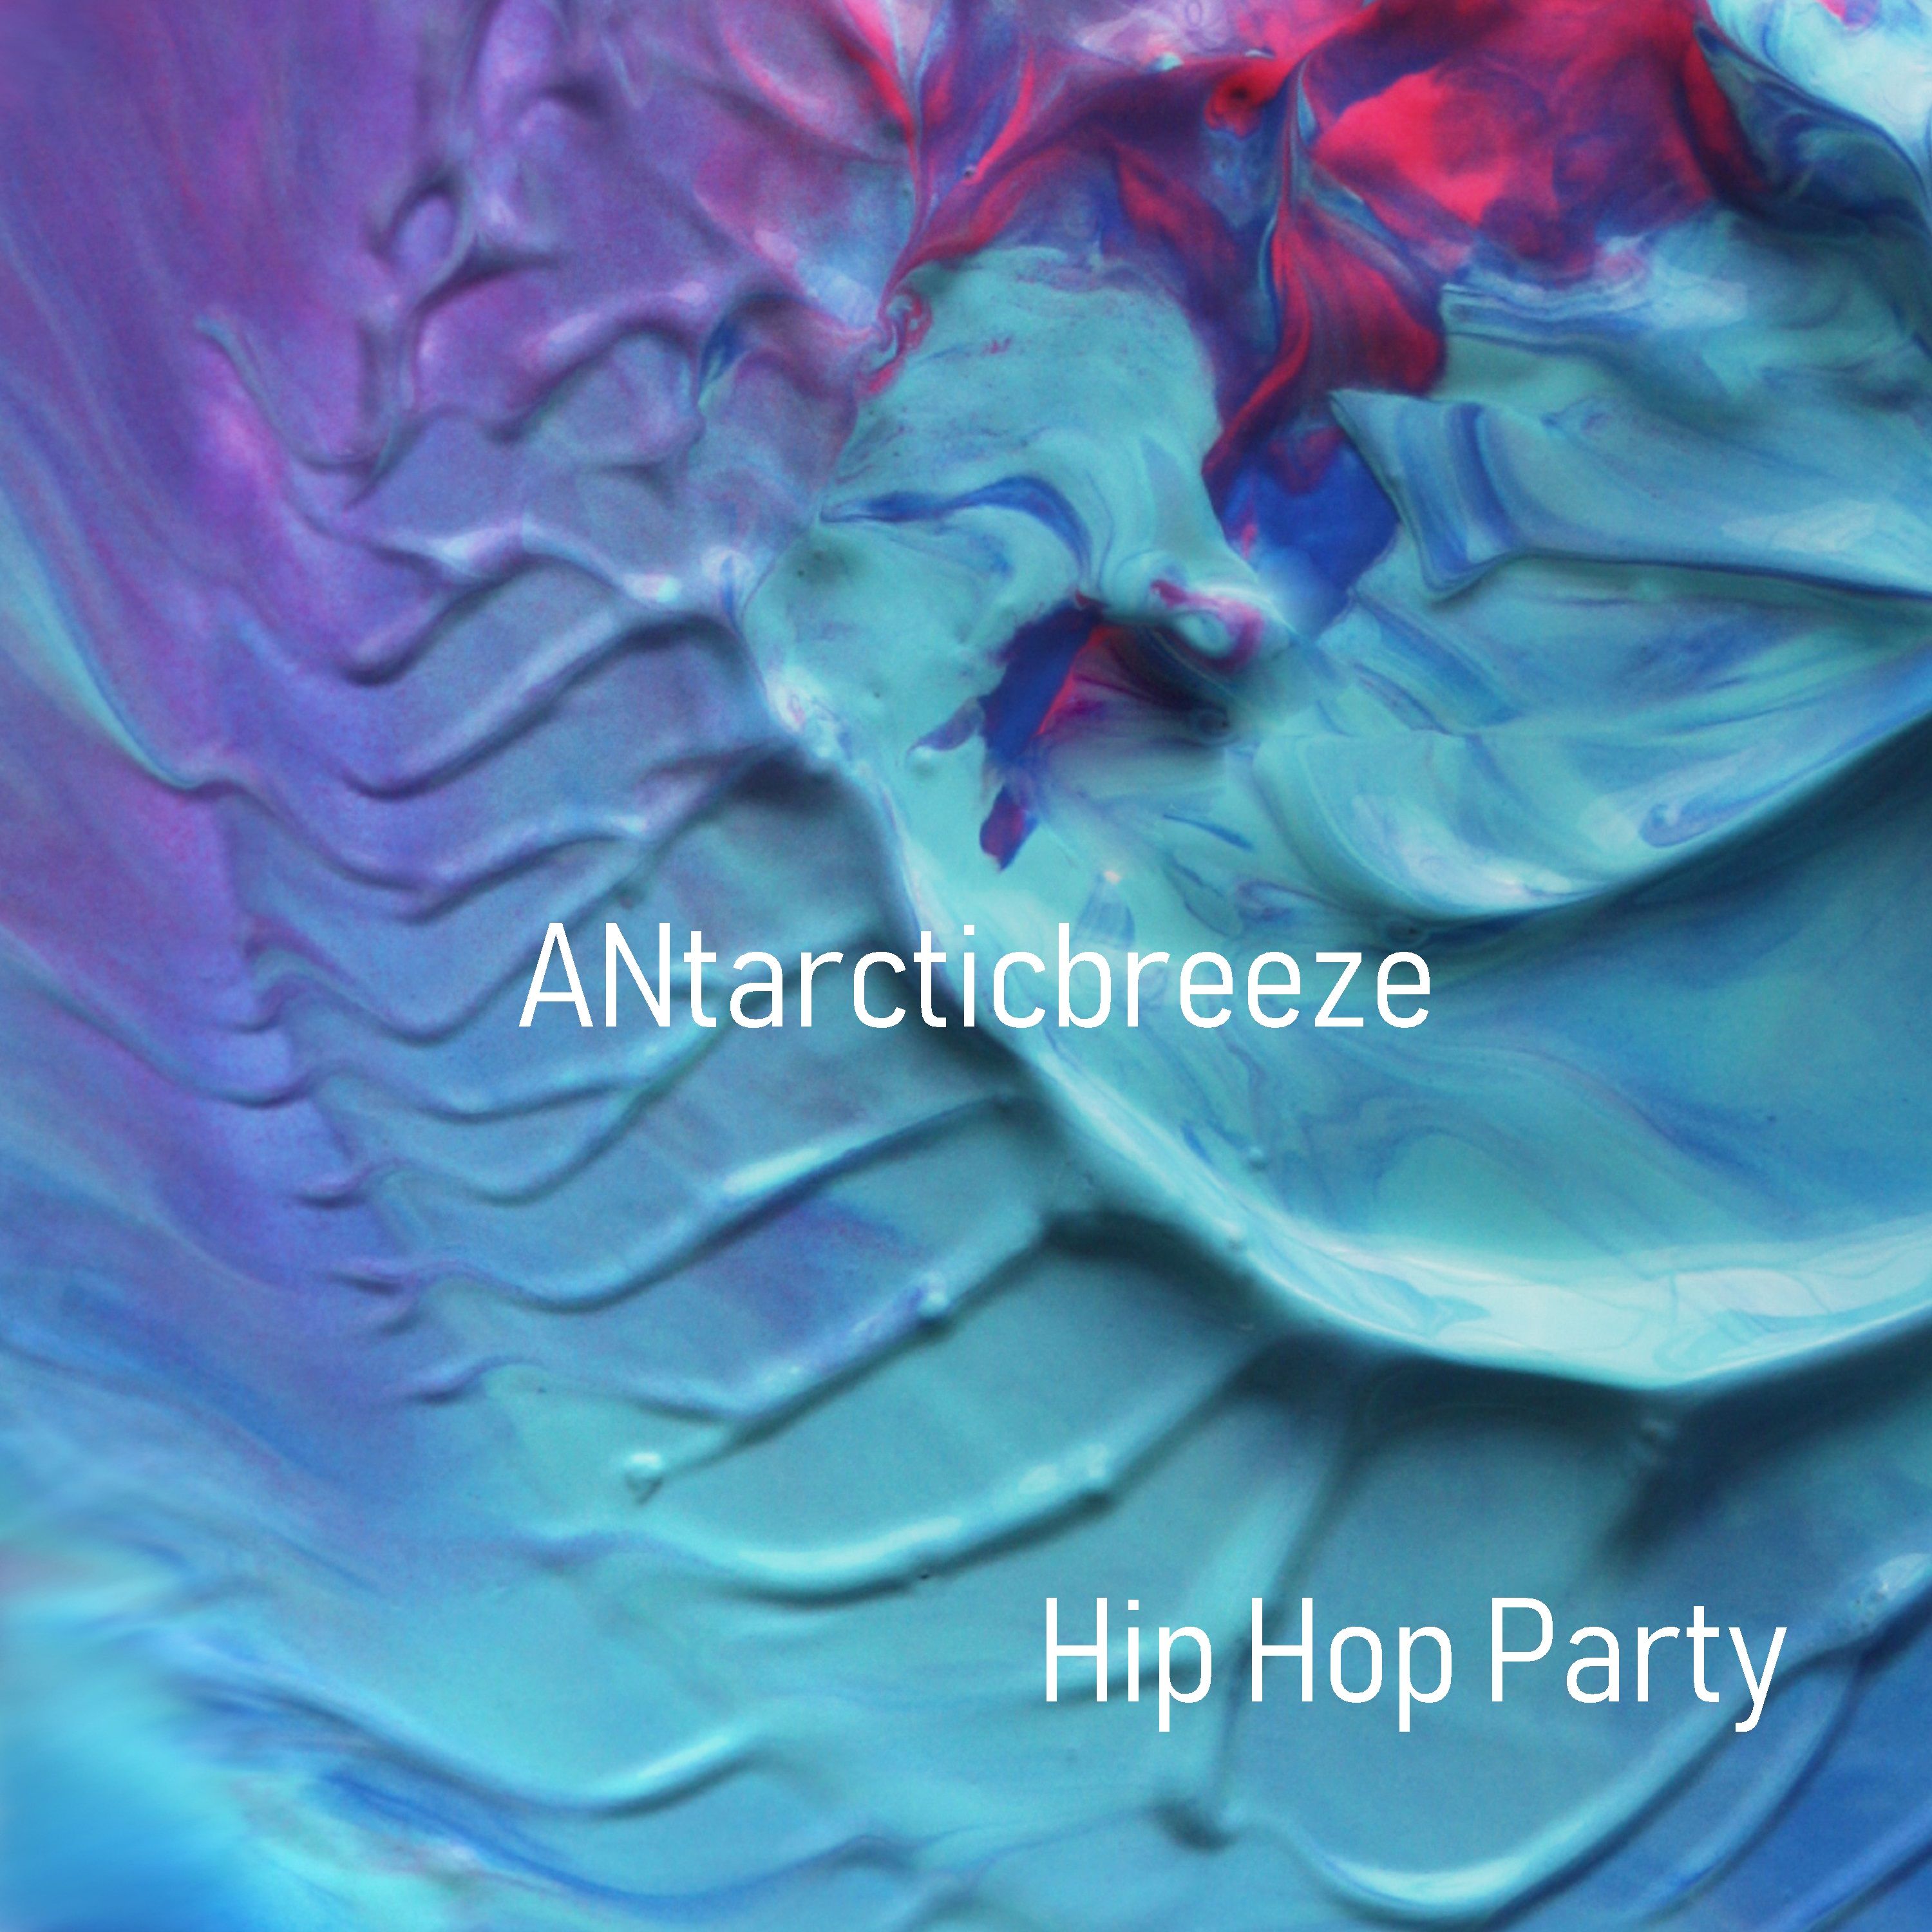 Download Hip Hop Party - Positive (Unlimit Use Music) by ANtarcticbreeze